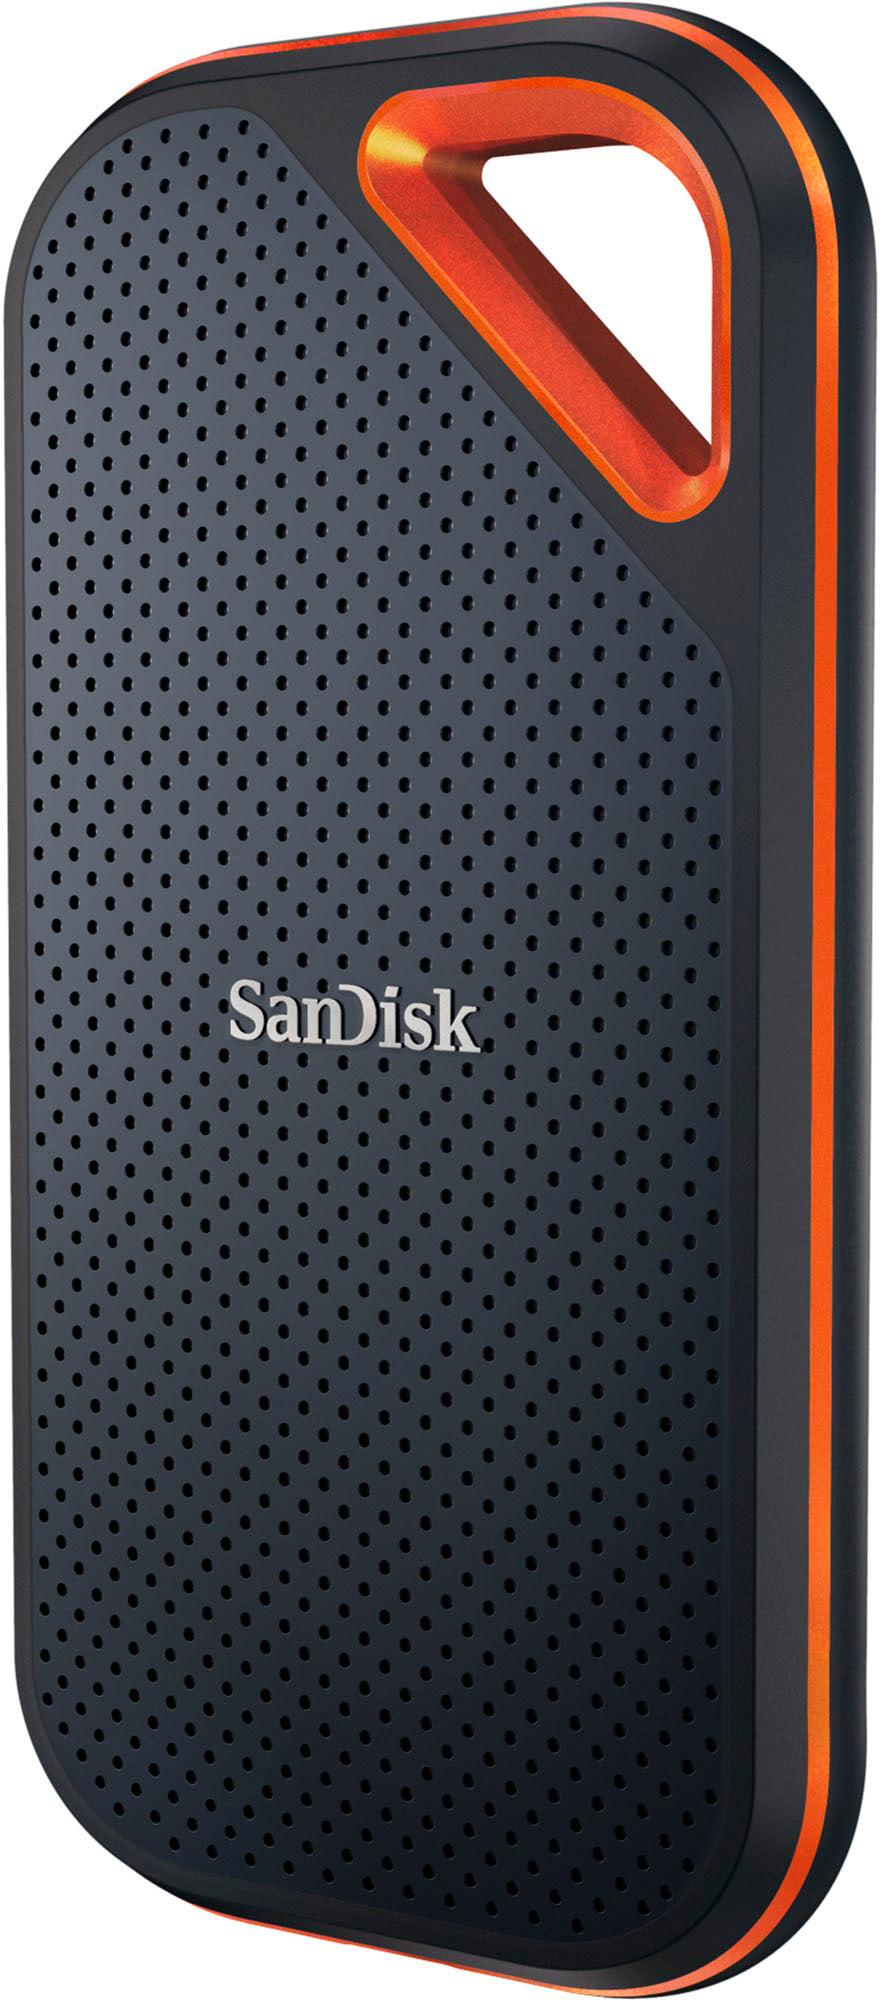 SanDisk - Extreme Pro Portable 4TB External USB-C NVMe SSD - Black_2